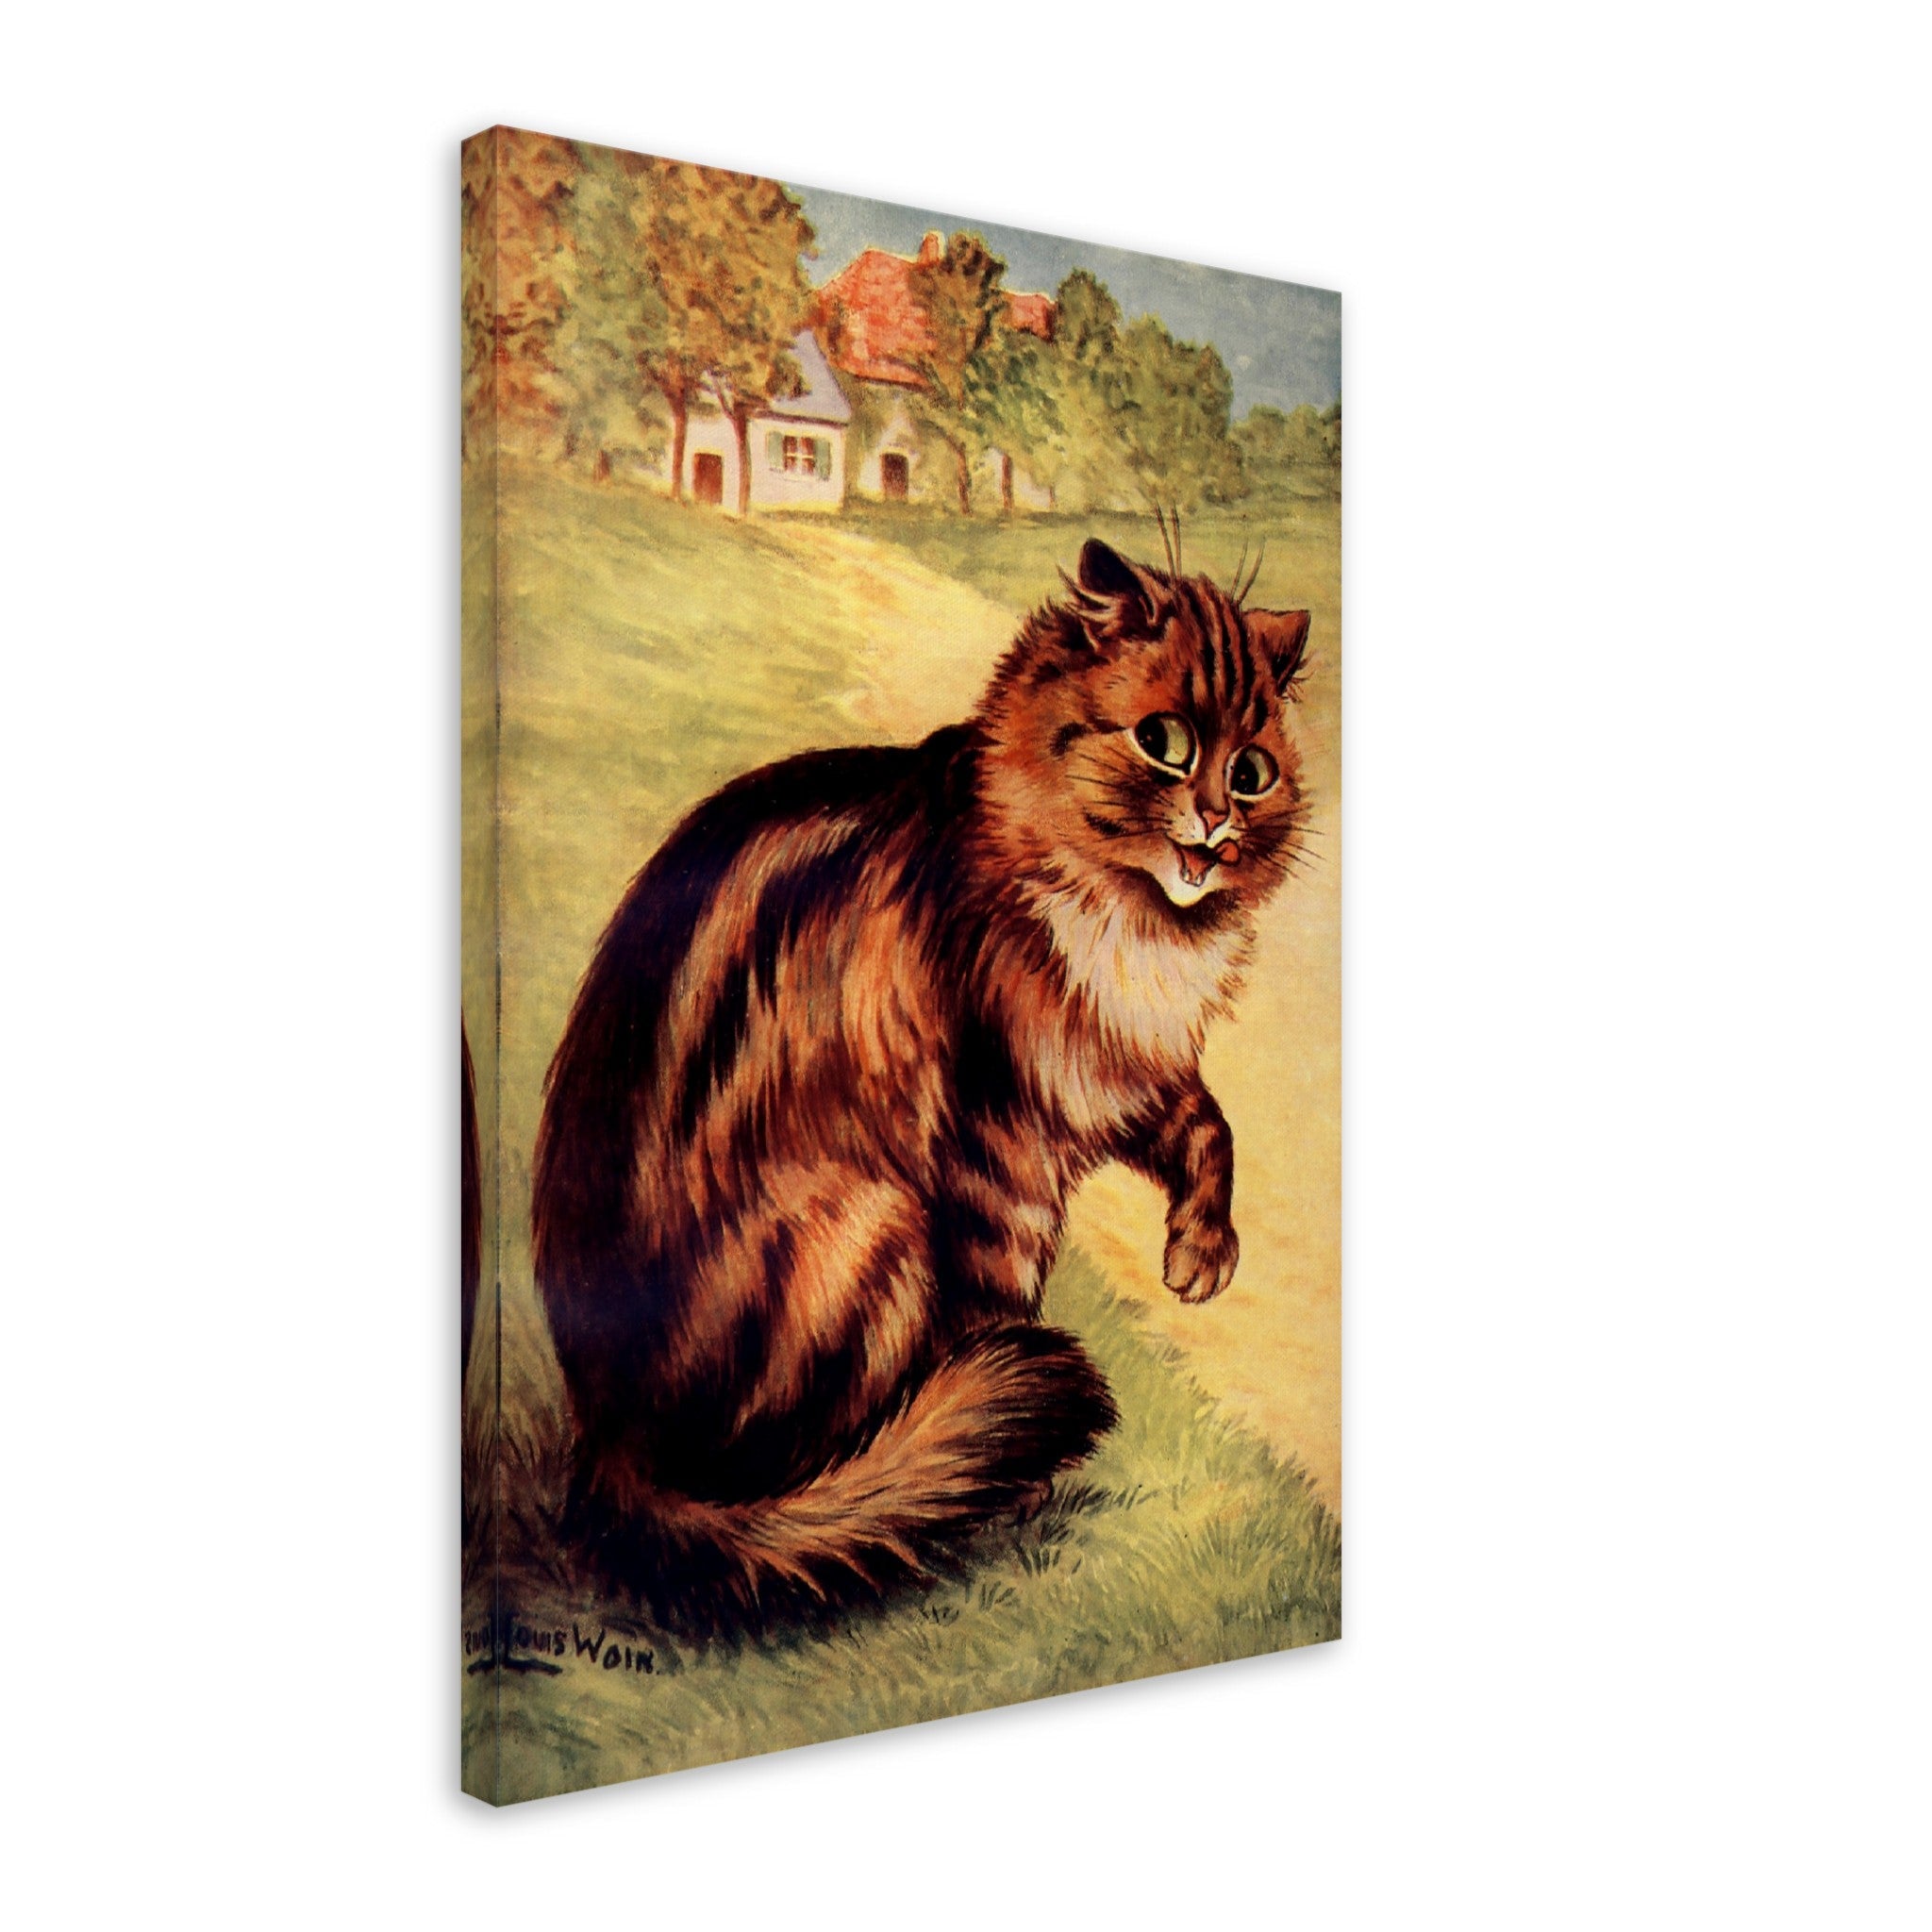 Louis Wain Canvas - Our Darlings Cat - Louis Wain Cat Canvas Print - Long Haired Tabby - WallArtPrints4U